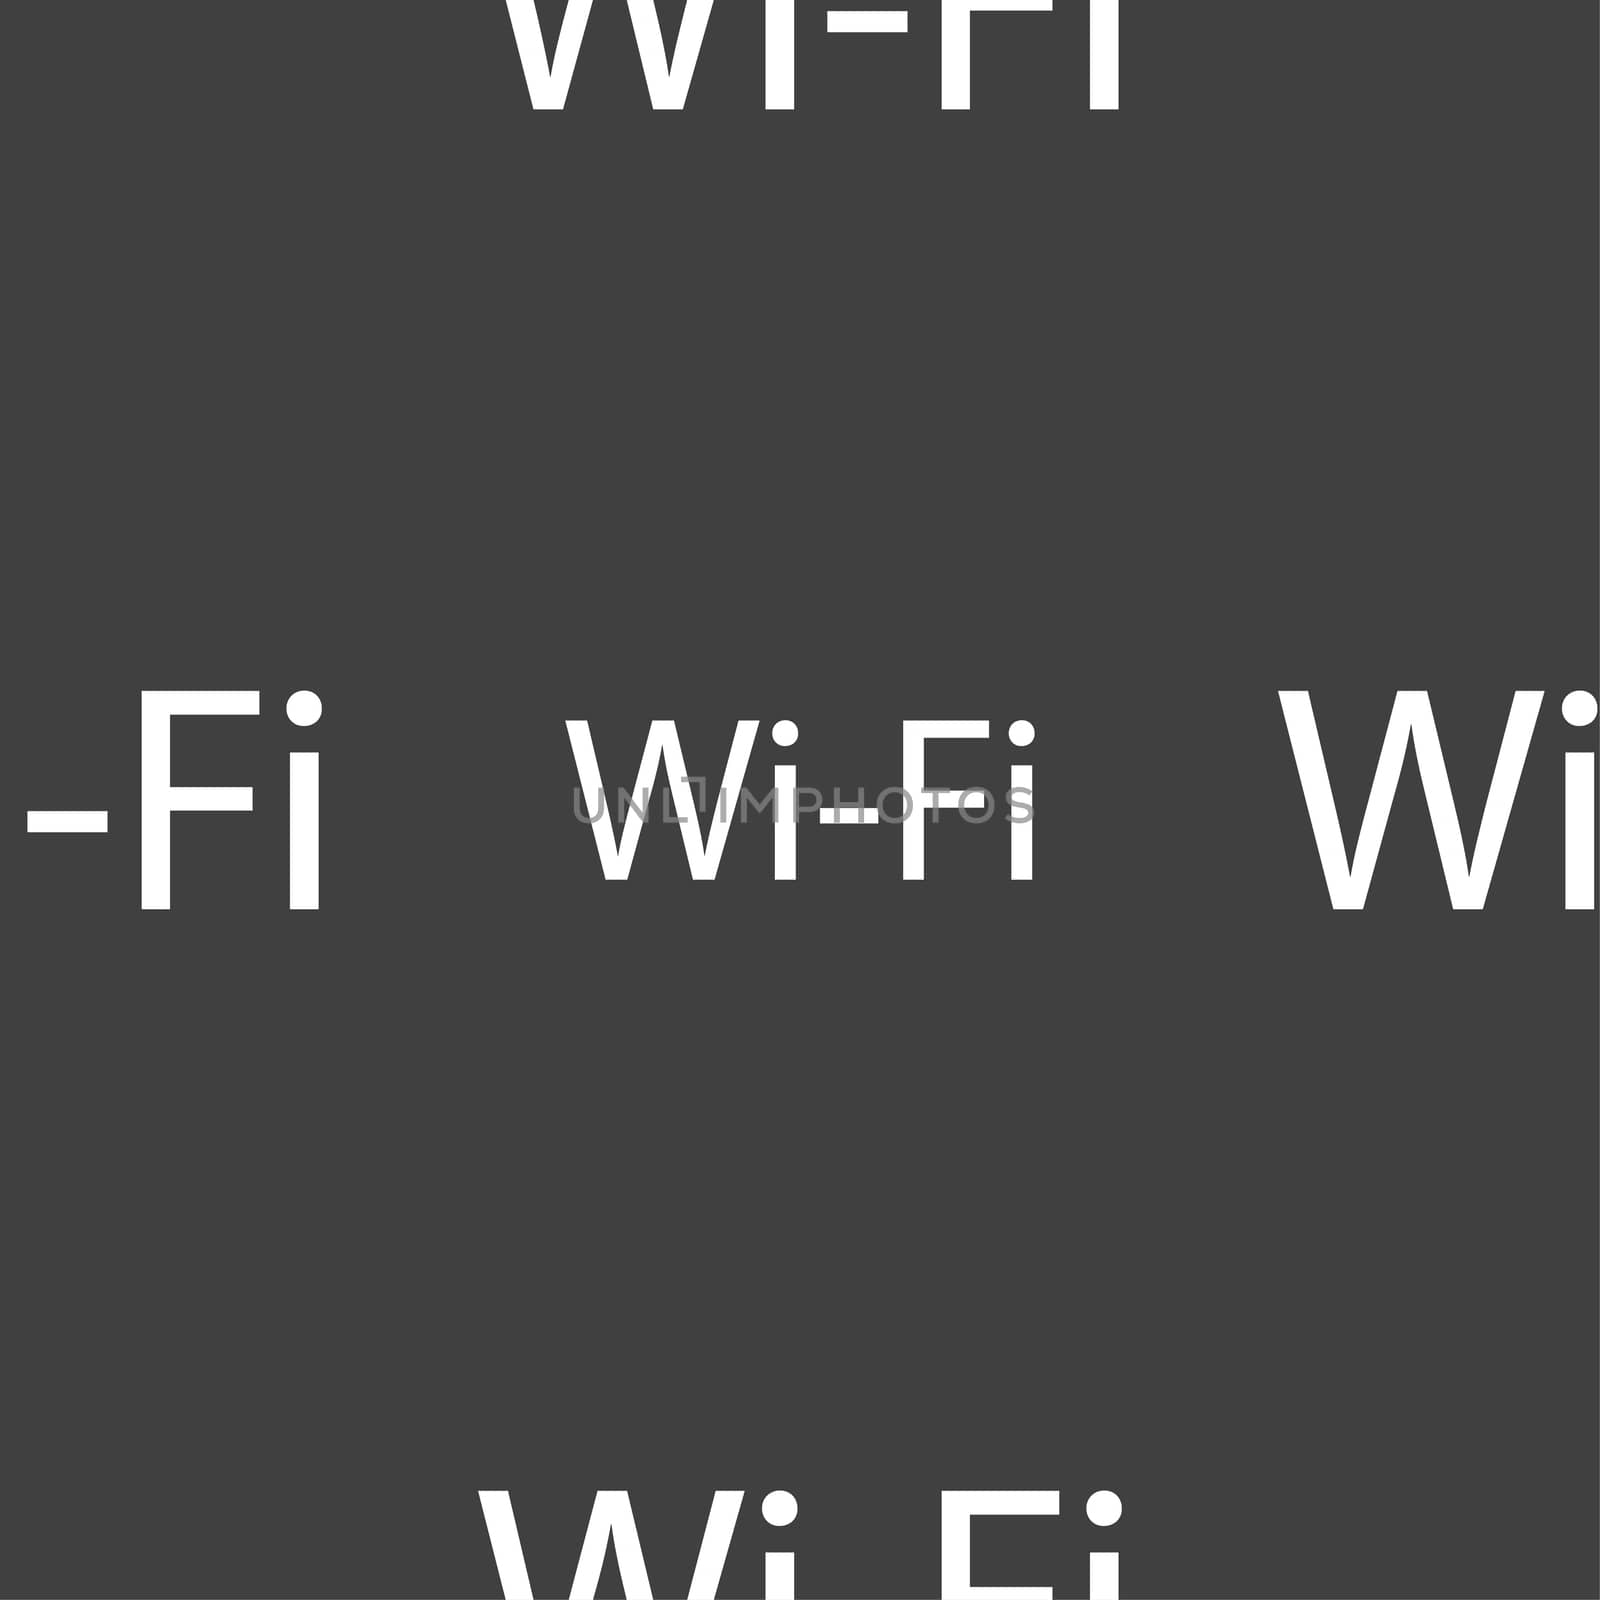 Free wifi sign. Wi-fi symbol. Wireless Network icon. Seamless pattern on a gray background.  by serhii_lohvyniuk